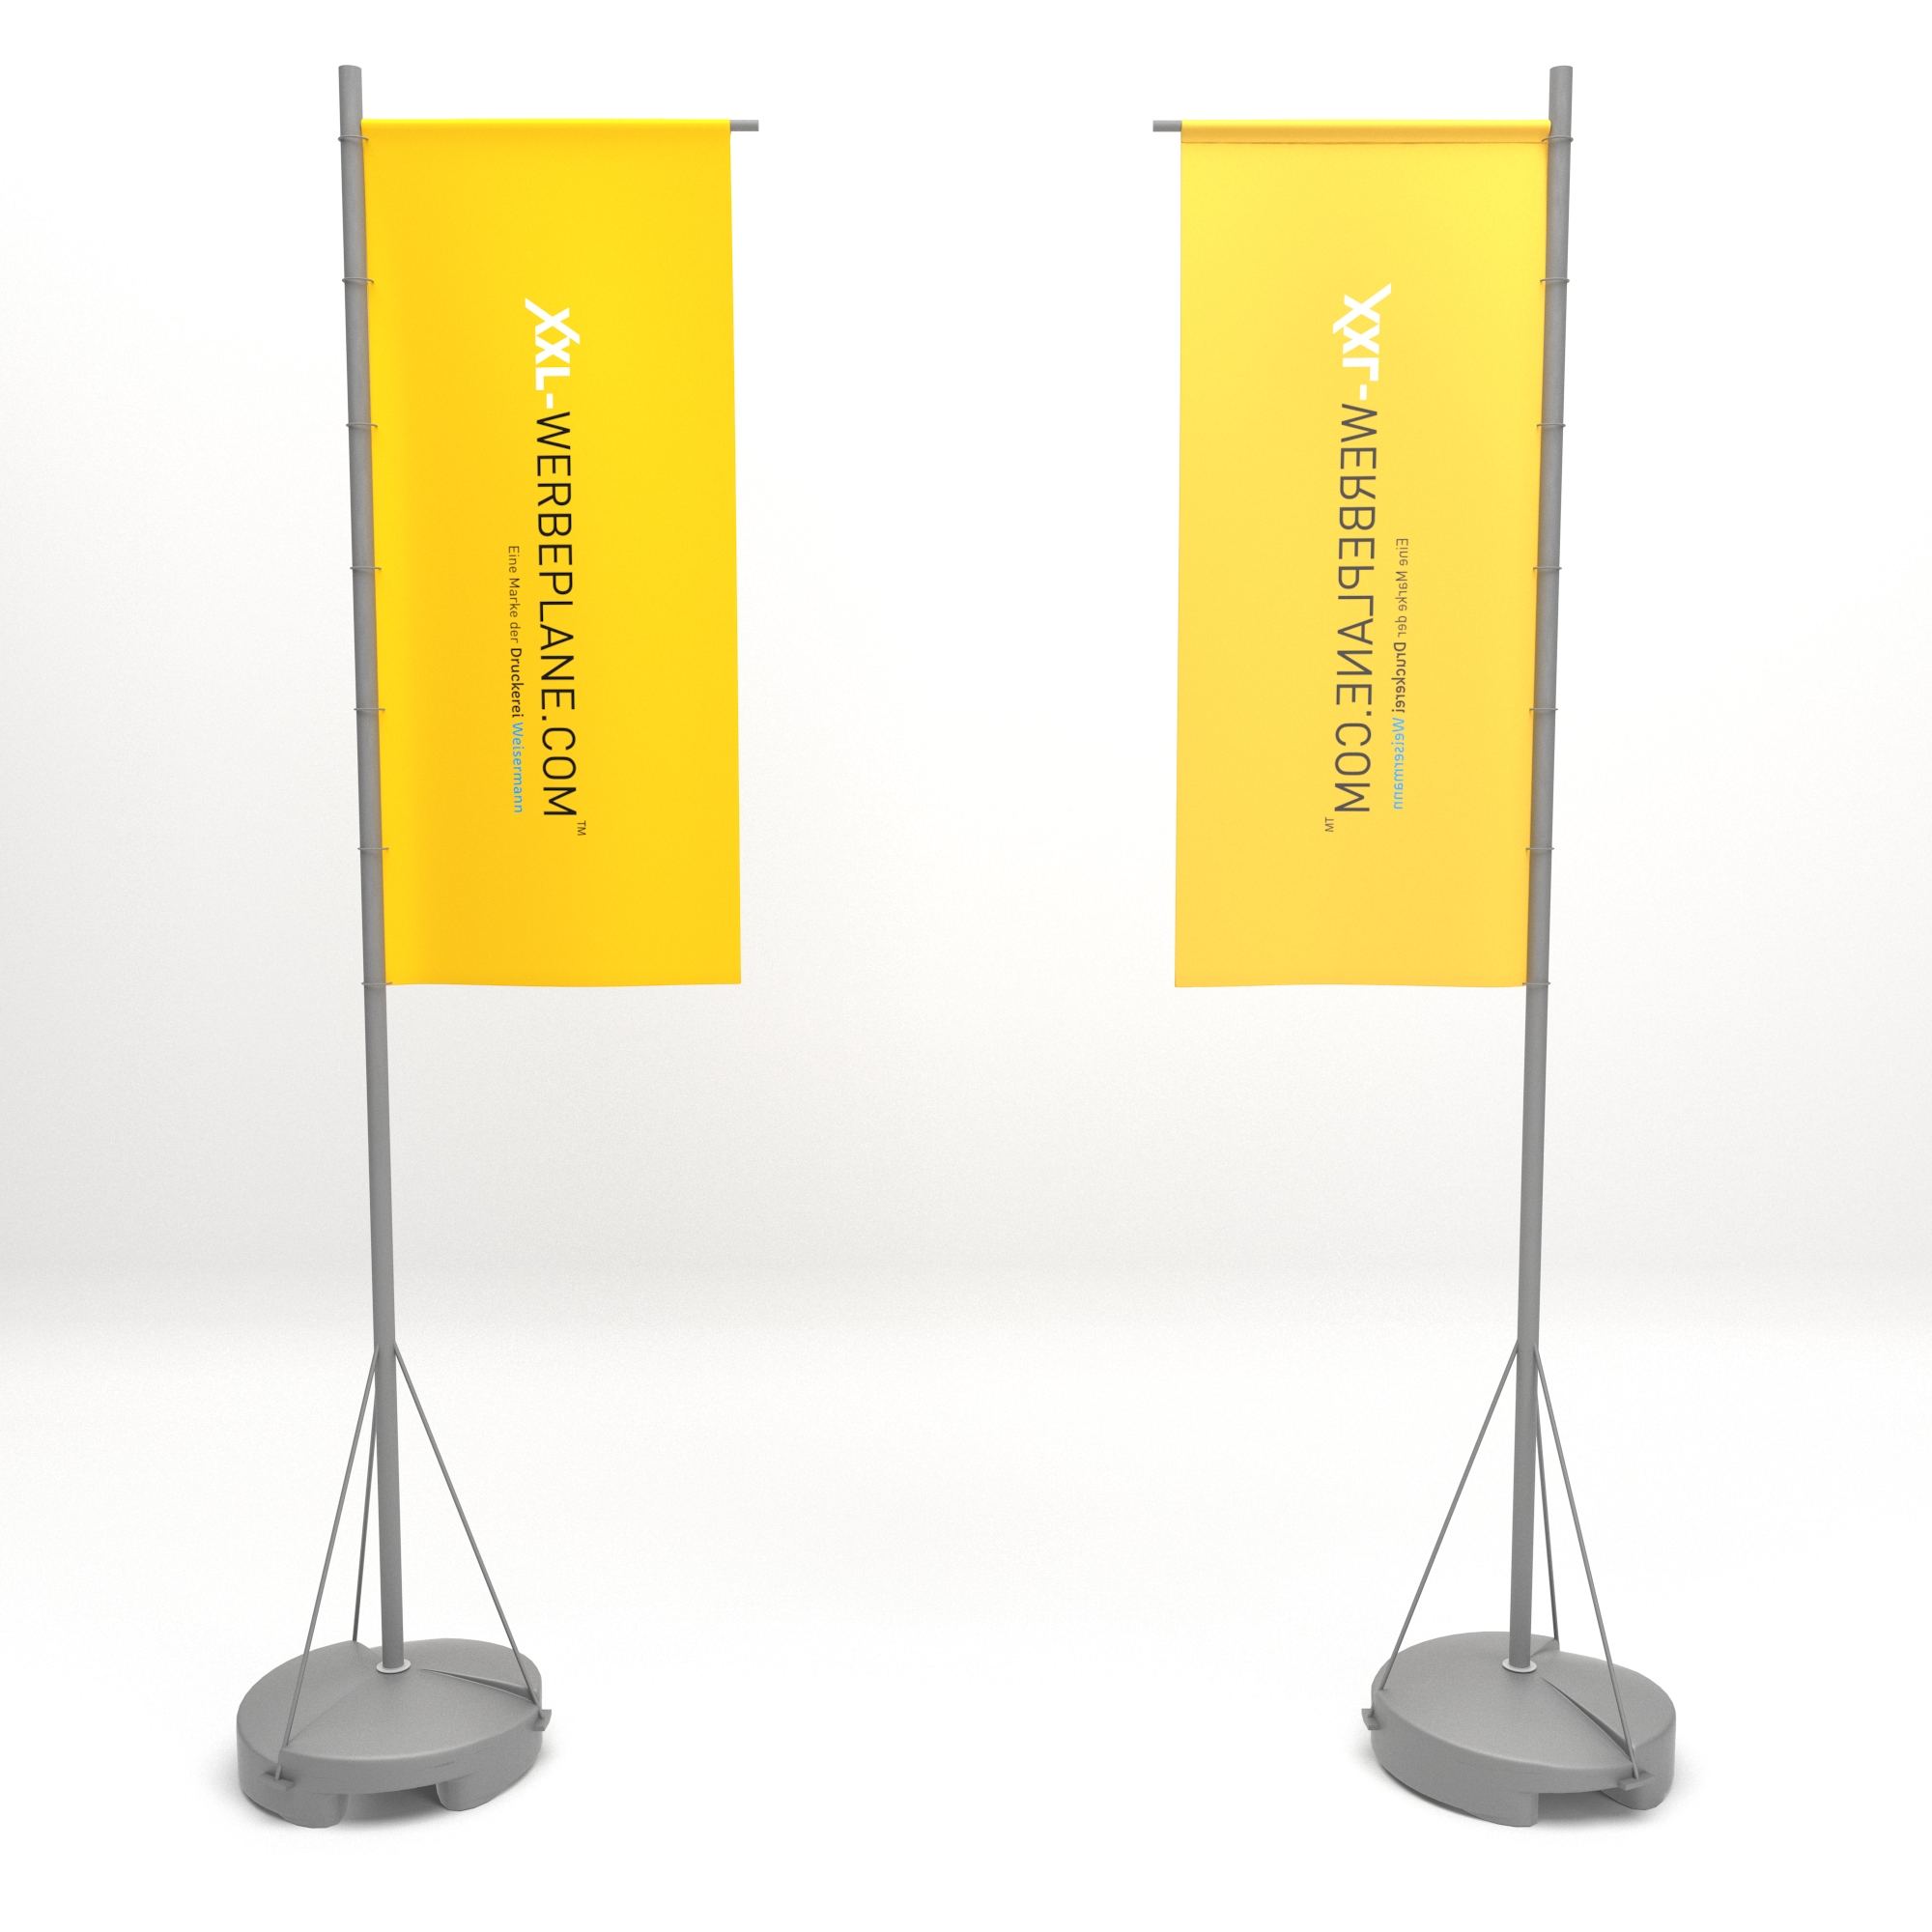 Entwurf und Mast Wasserring Werbefahne/Werbeflagge Hoehe 320cm inkl Gestell 